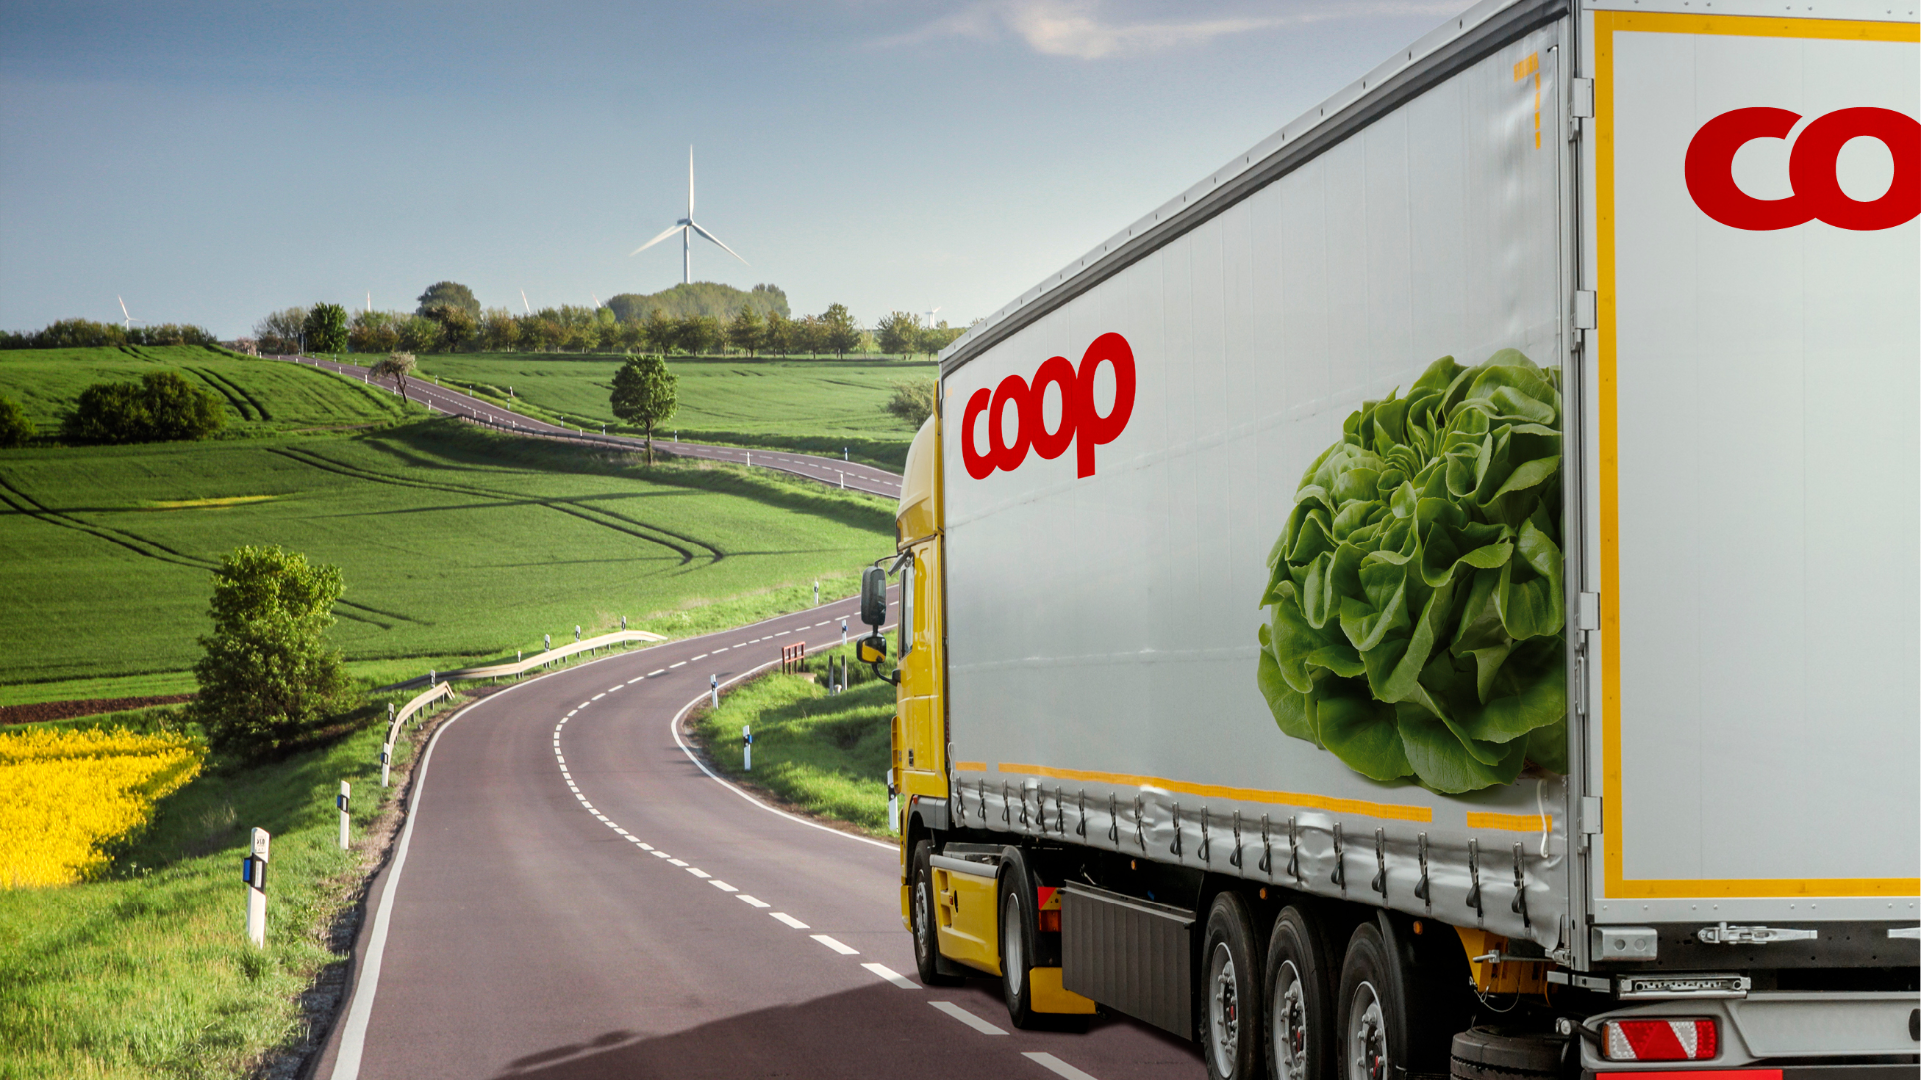 Coop Danmark digitised its supply chain